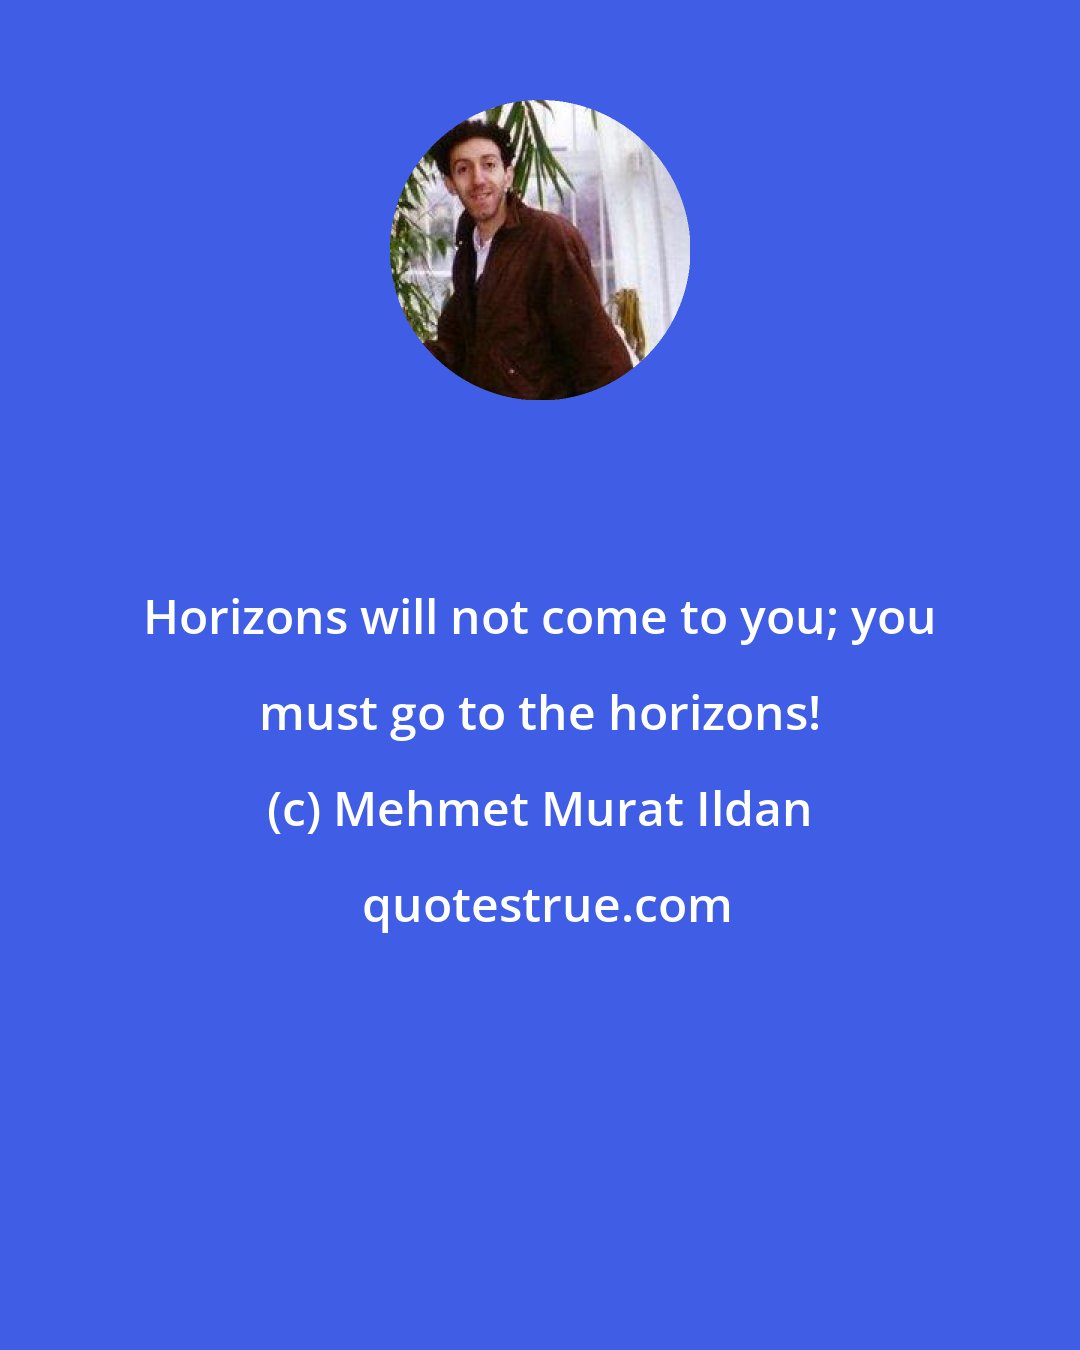 Mehmet Murat Ildan: Horizons will not come to you; you must go to the horizons!